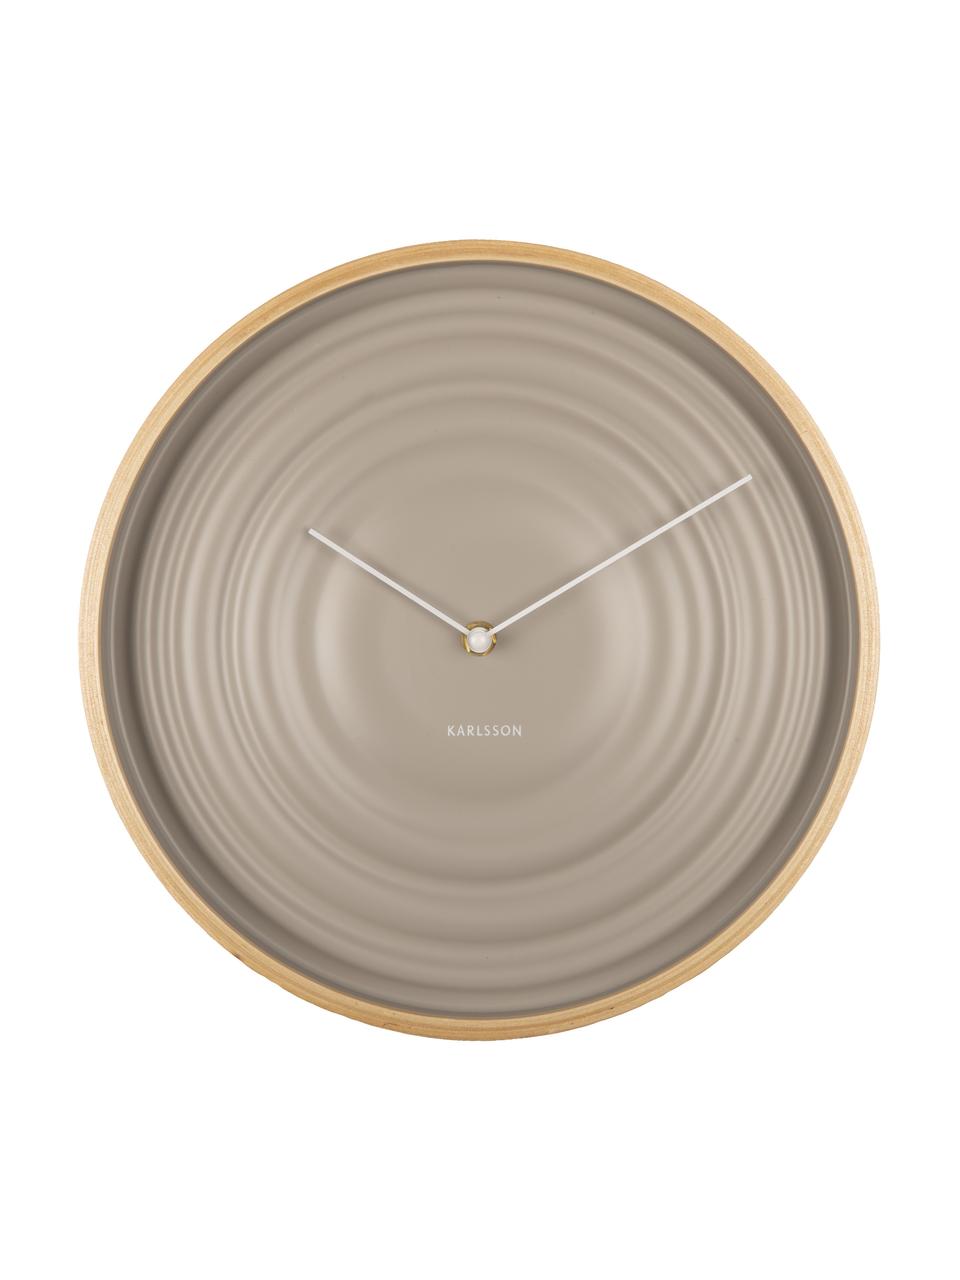 Reloj de pared Scandi Ribble, Beige, gris mate, Ø 31 cm